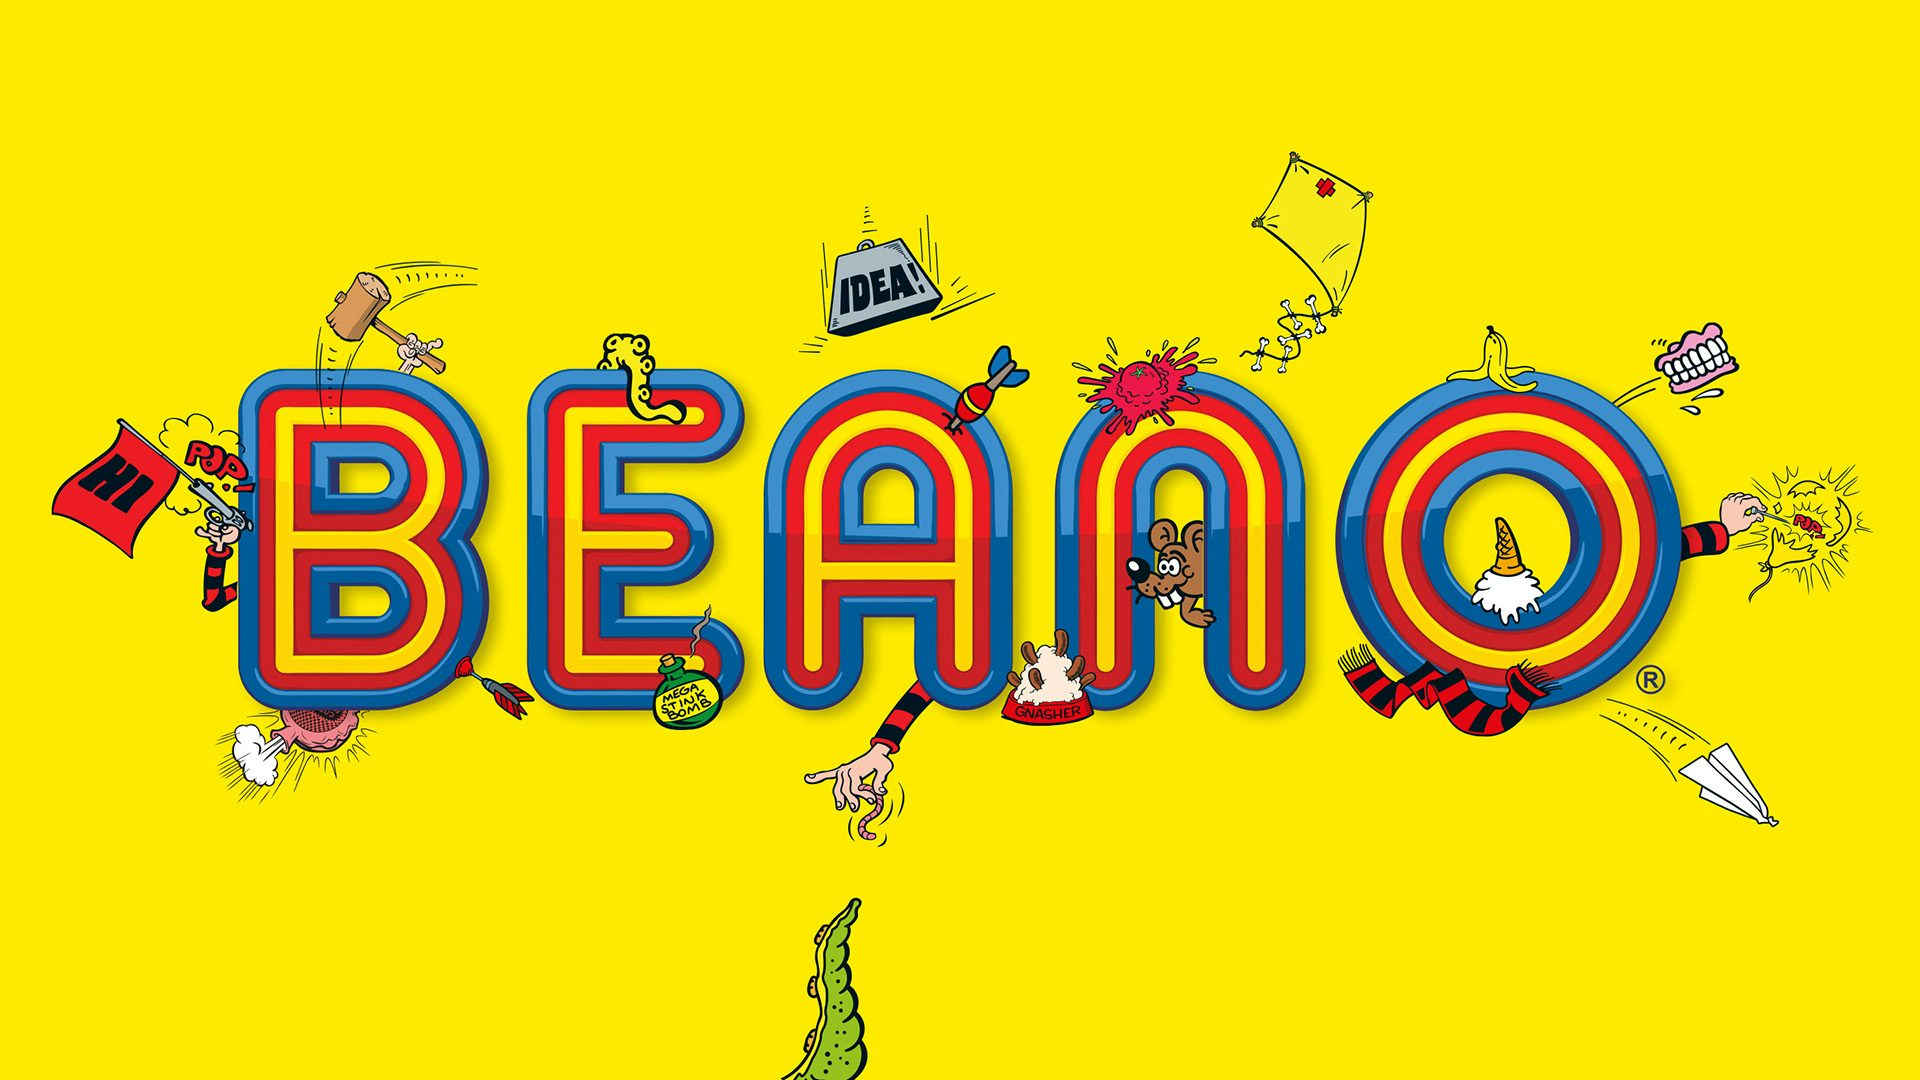 Graphic of Beano's logo